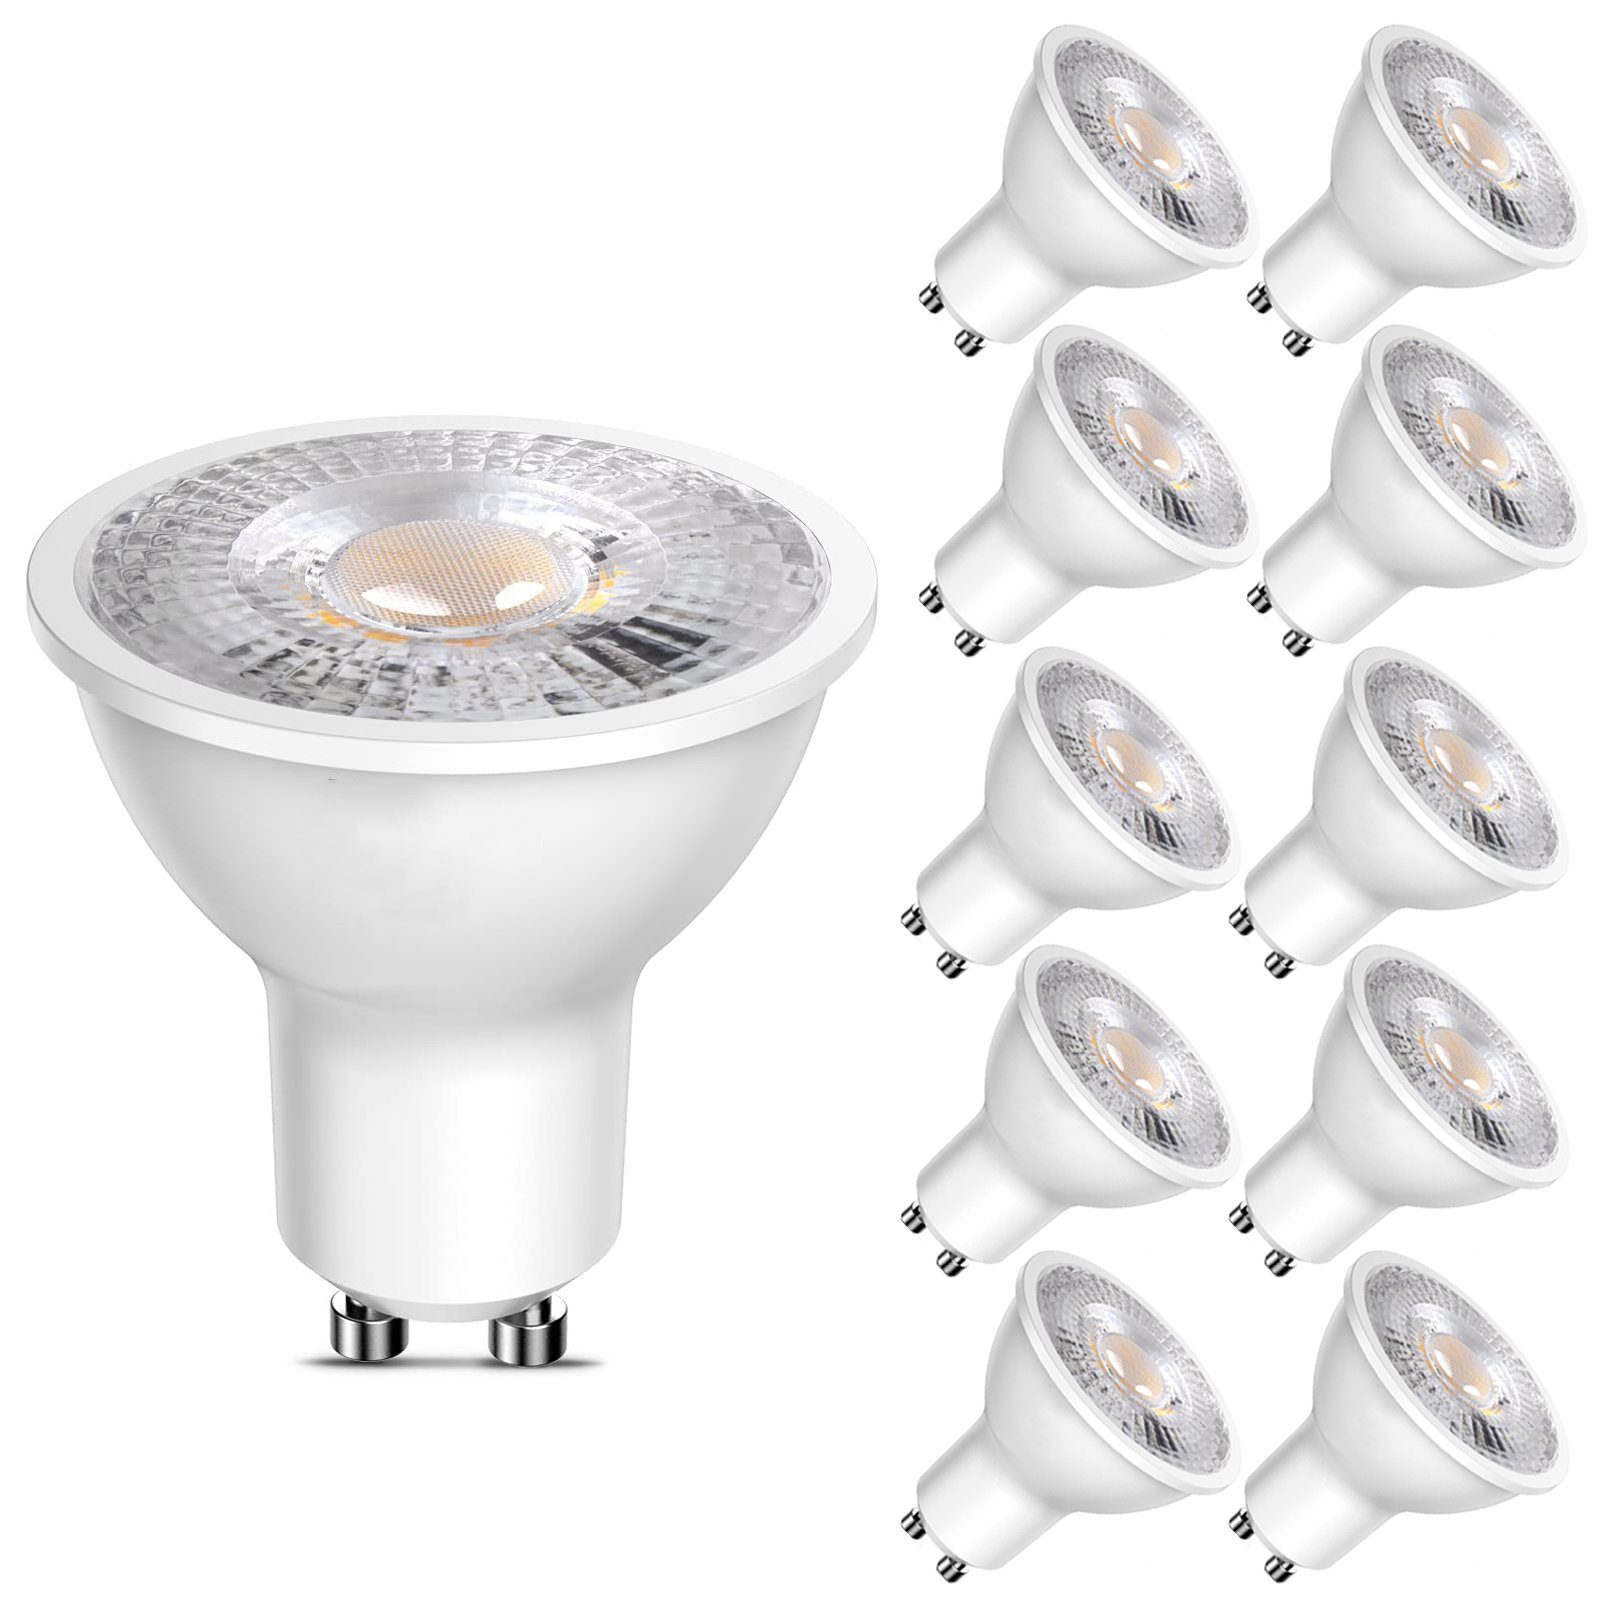 MUPOO LED-Leuchtmittel GU10 LED-Glühbirne 7W,10St.LED Lampe 6500K Weiß,LED-Leuchtmittel, 270°Spot Reflektor Birne Lumen Energiesparlampe